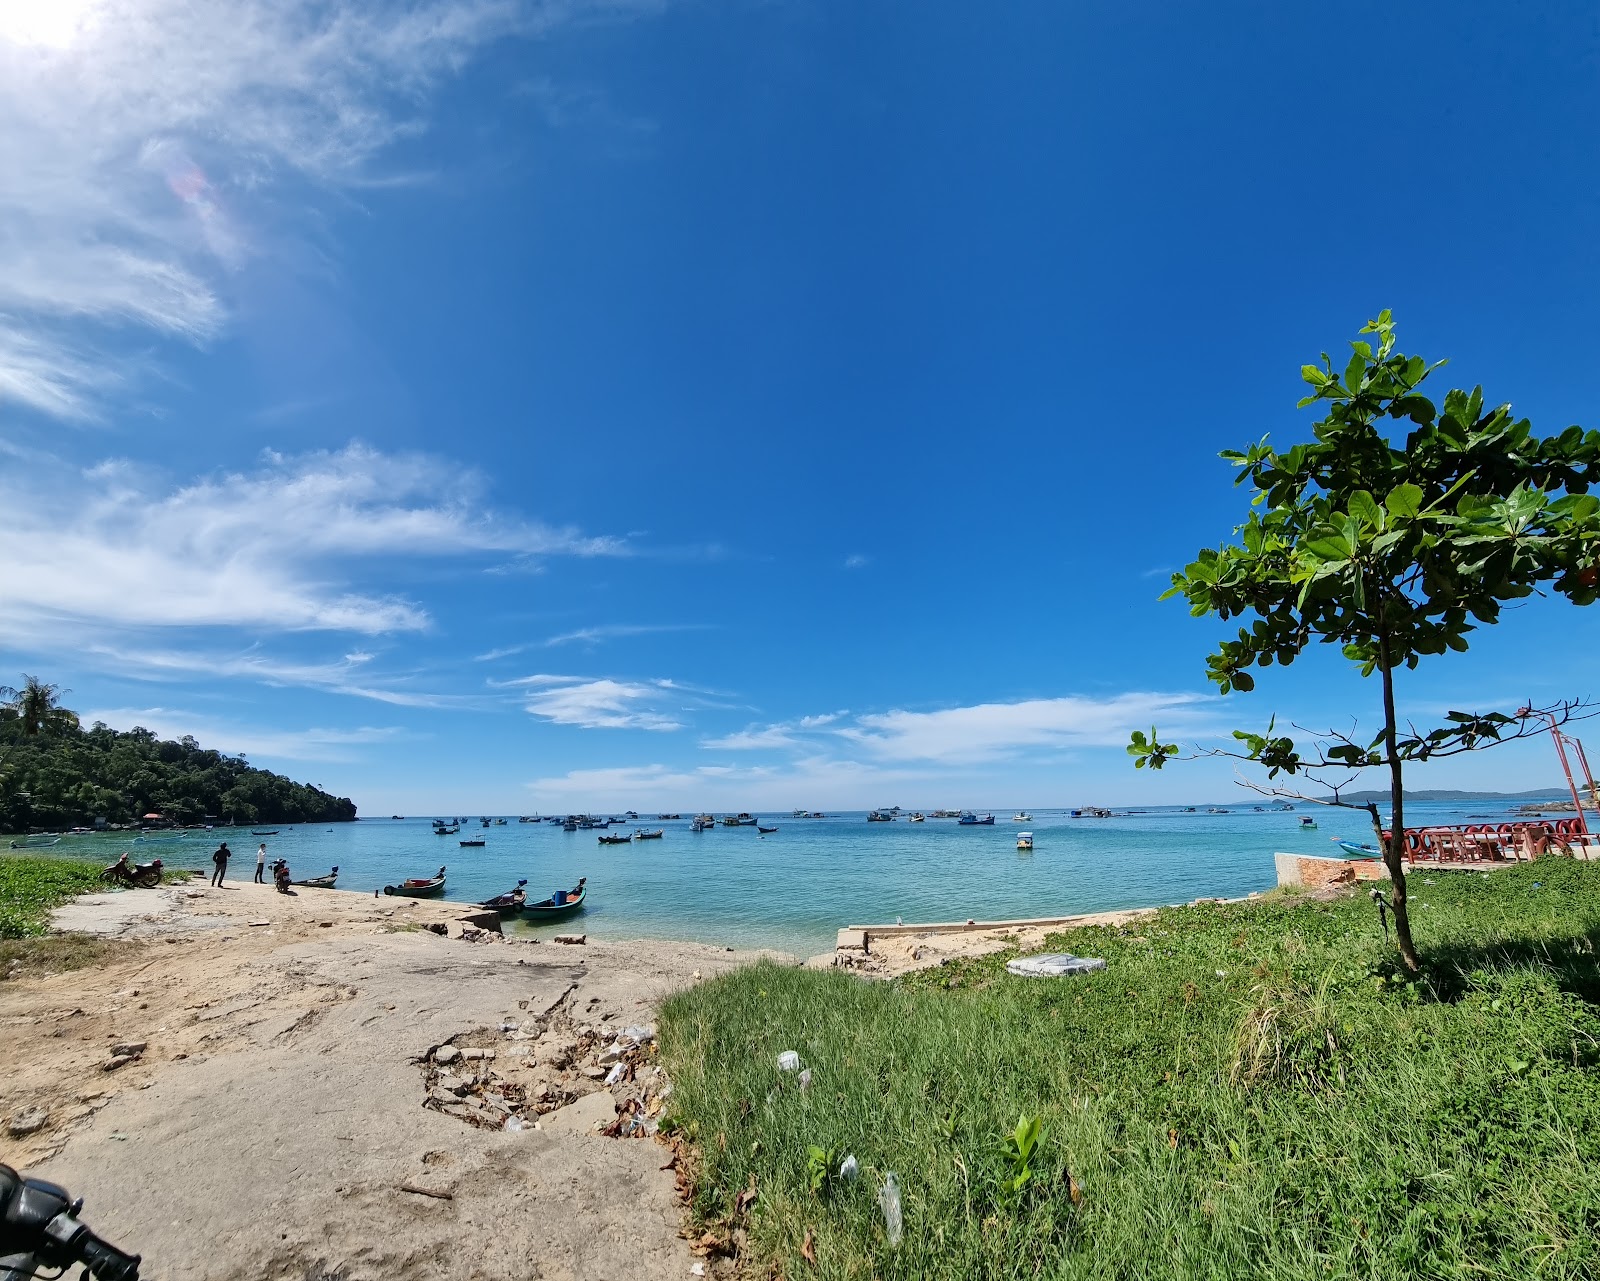 Foto af Ganh Dau Beach bakket op af klipperne